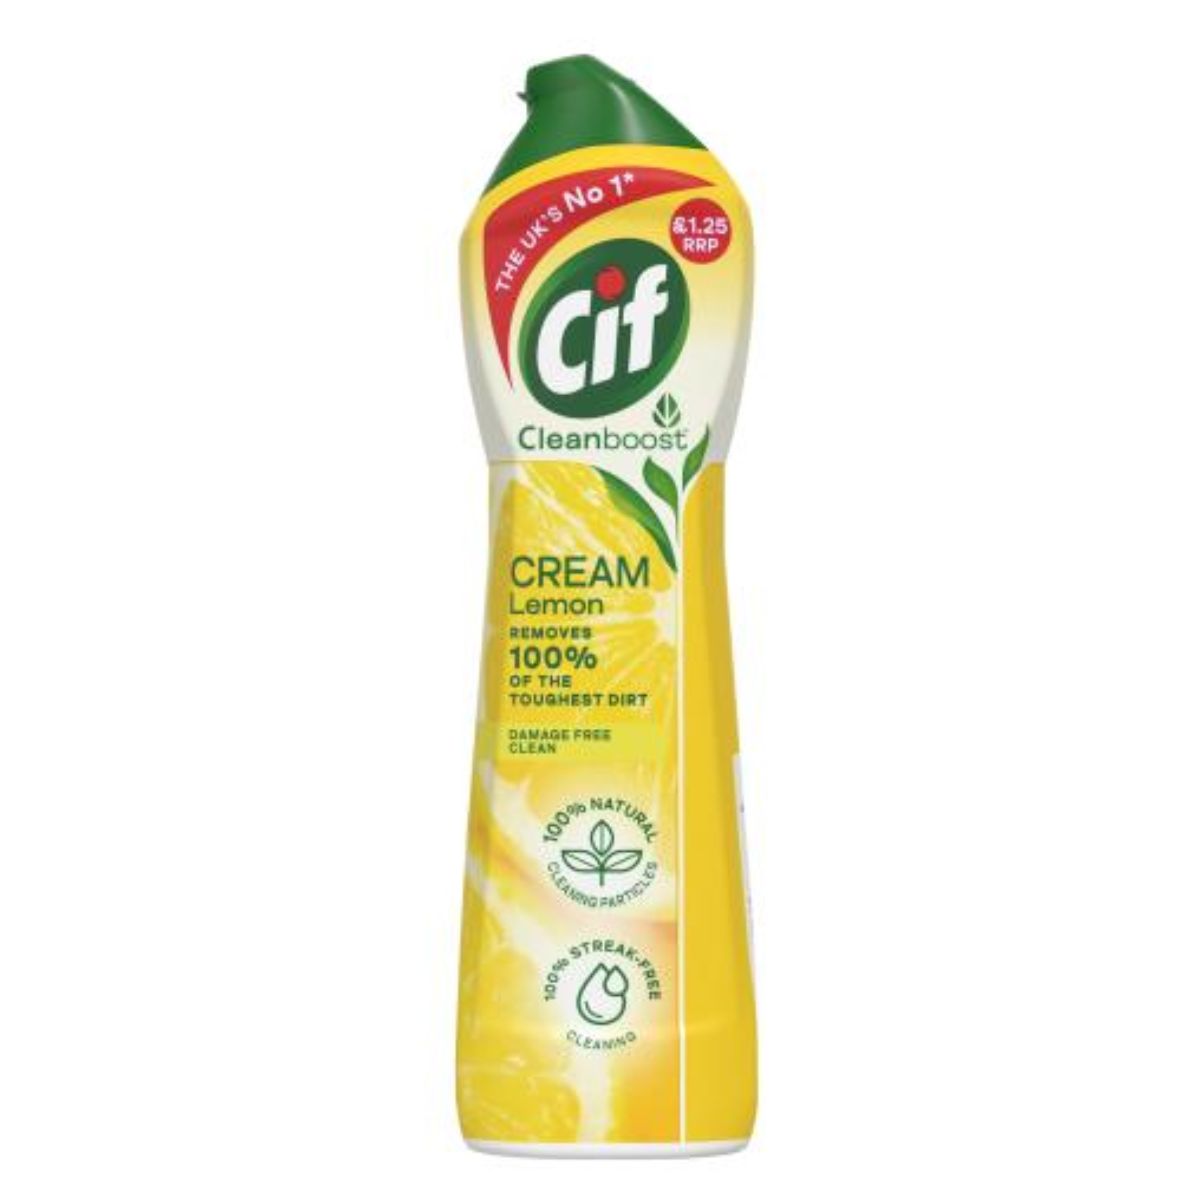 A bottle of Cif - Cream Lemon Fresh - 500ml on a white background.